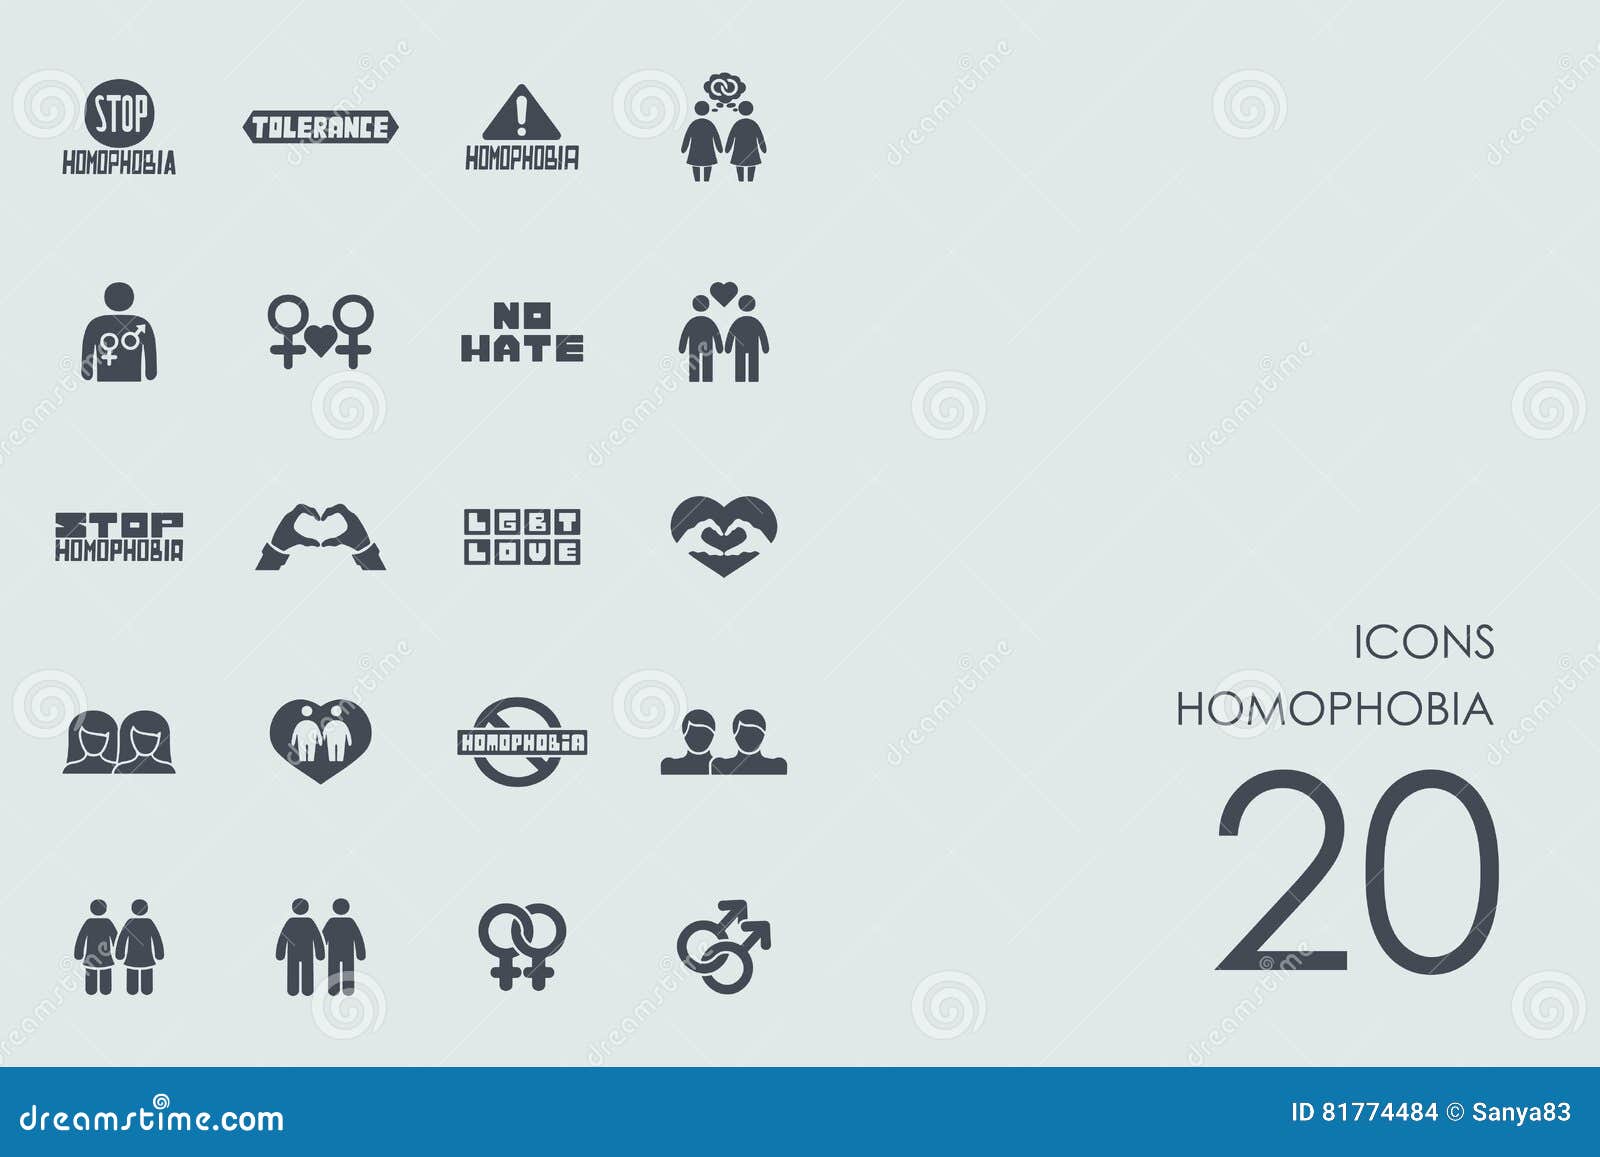 set of homophobia icons